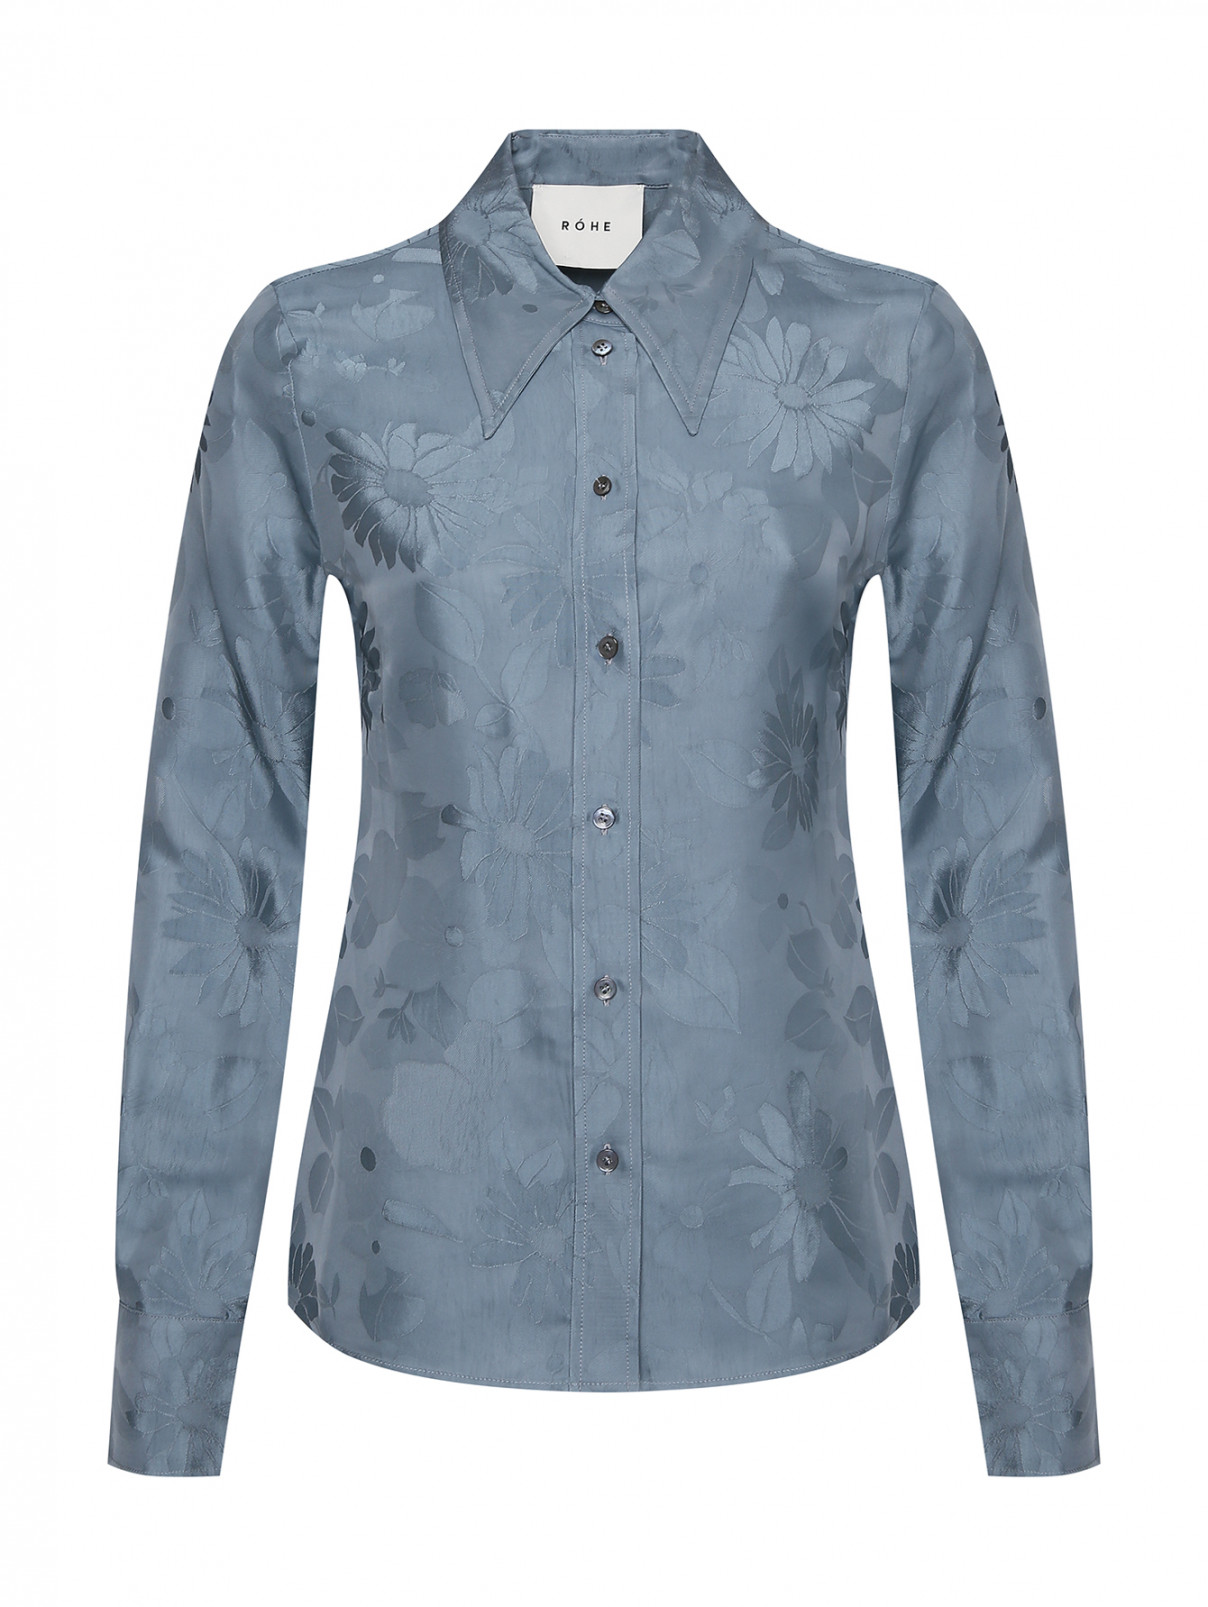 Блуза из вискозы с узором Rohe  –  Общий вид  – Цвет:  Синий